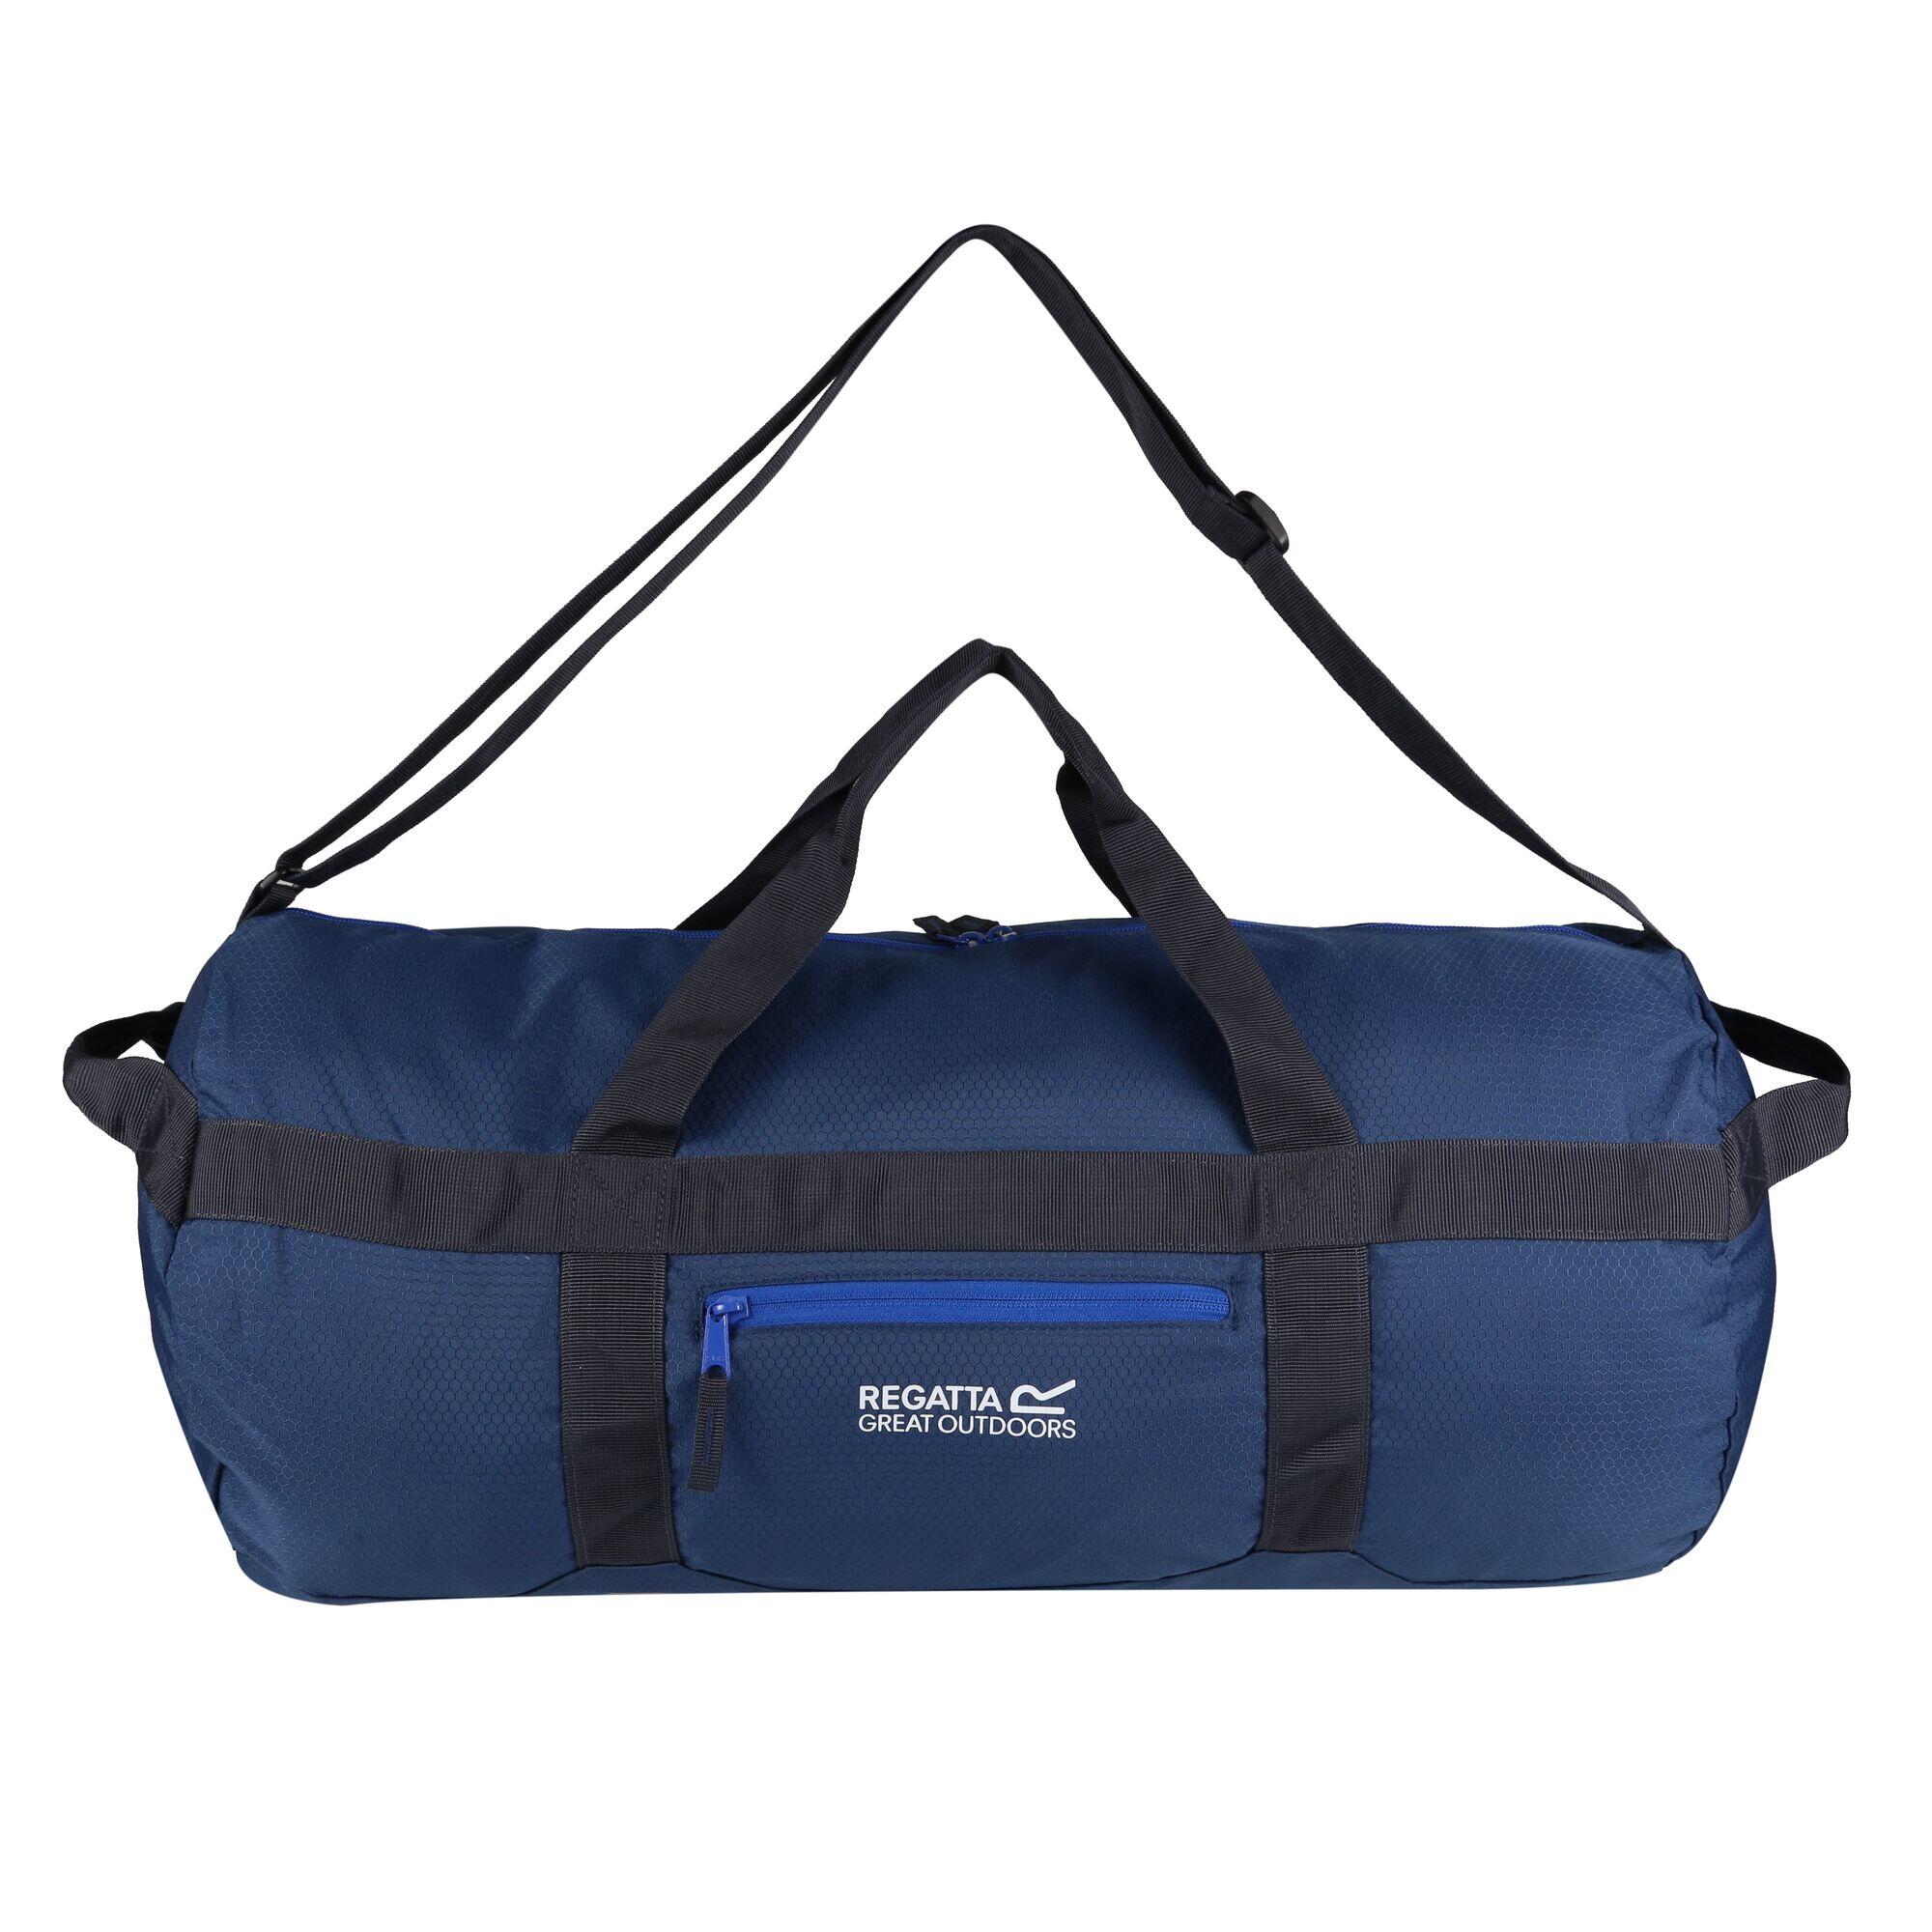 REGATTA Packaway Duffle Bag (Dark Denim/Nautical Blue)